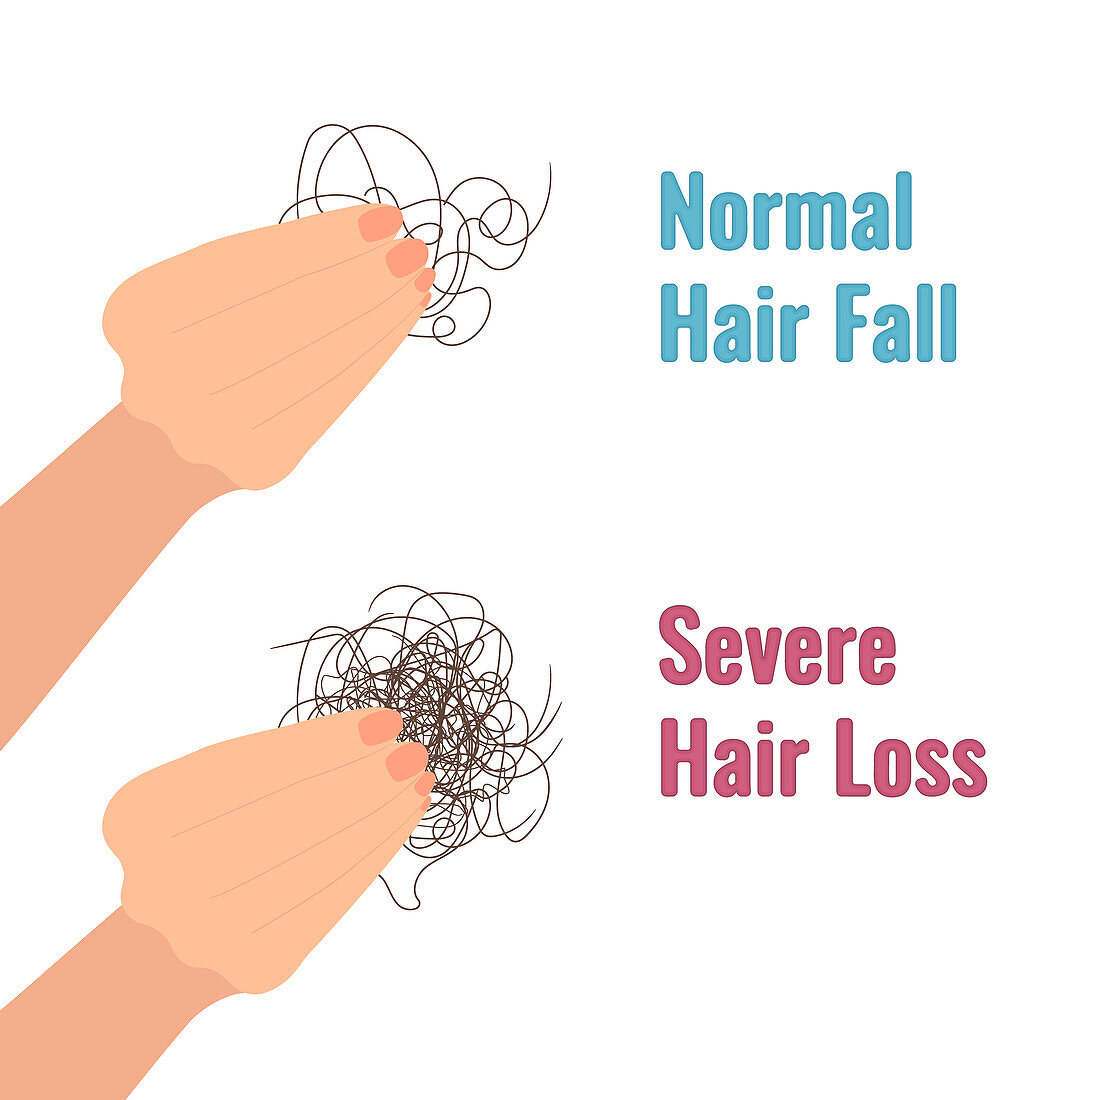 Hair shedding versus hair loss, conceptual illustration